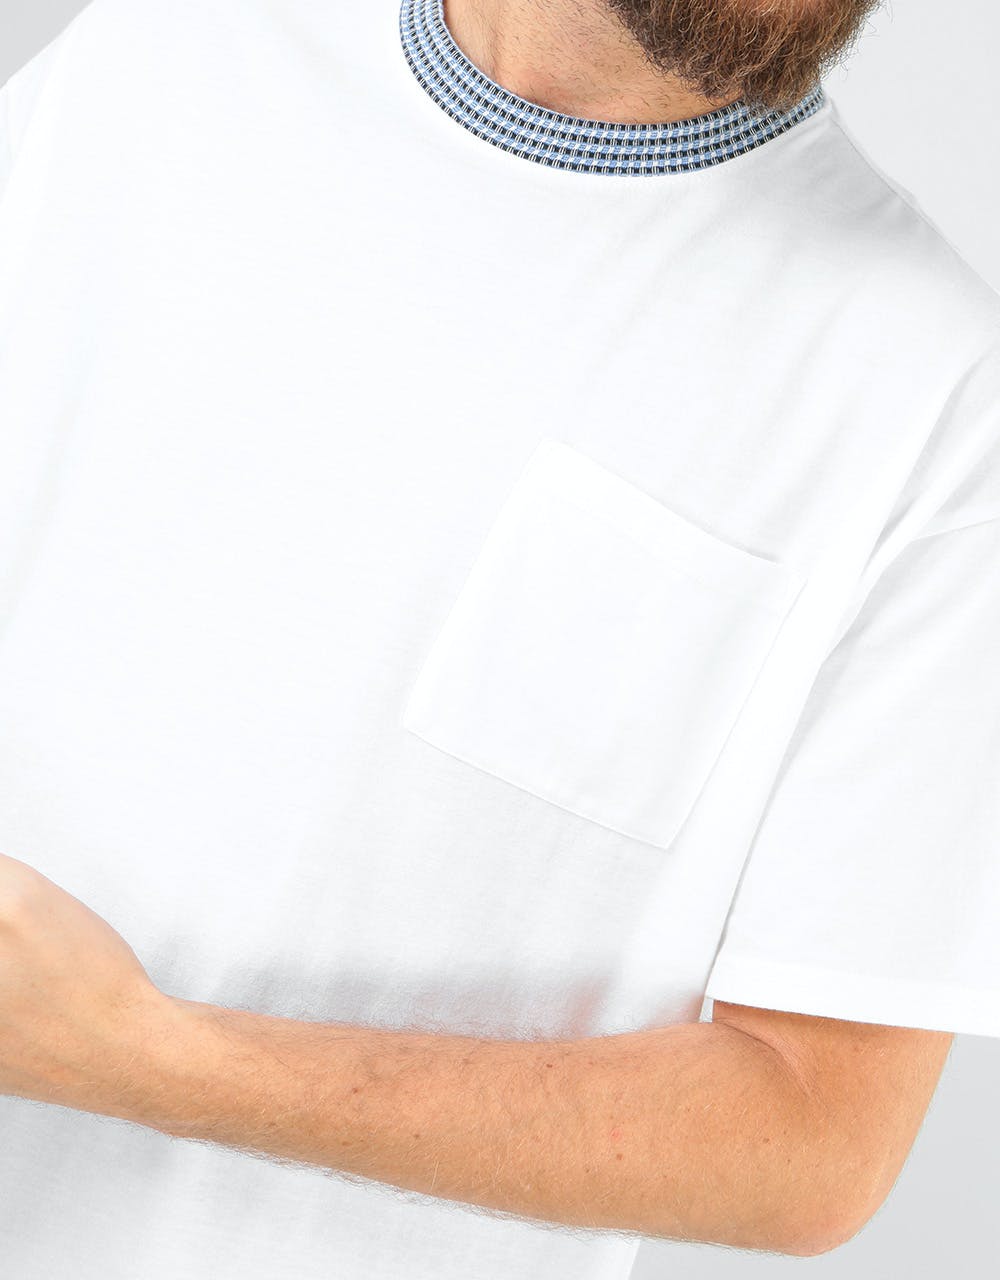 Levi's Skateboarding Boxy T-Shirt - Bright White